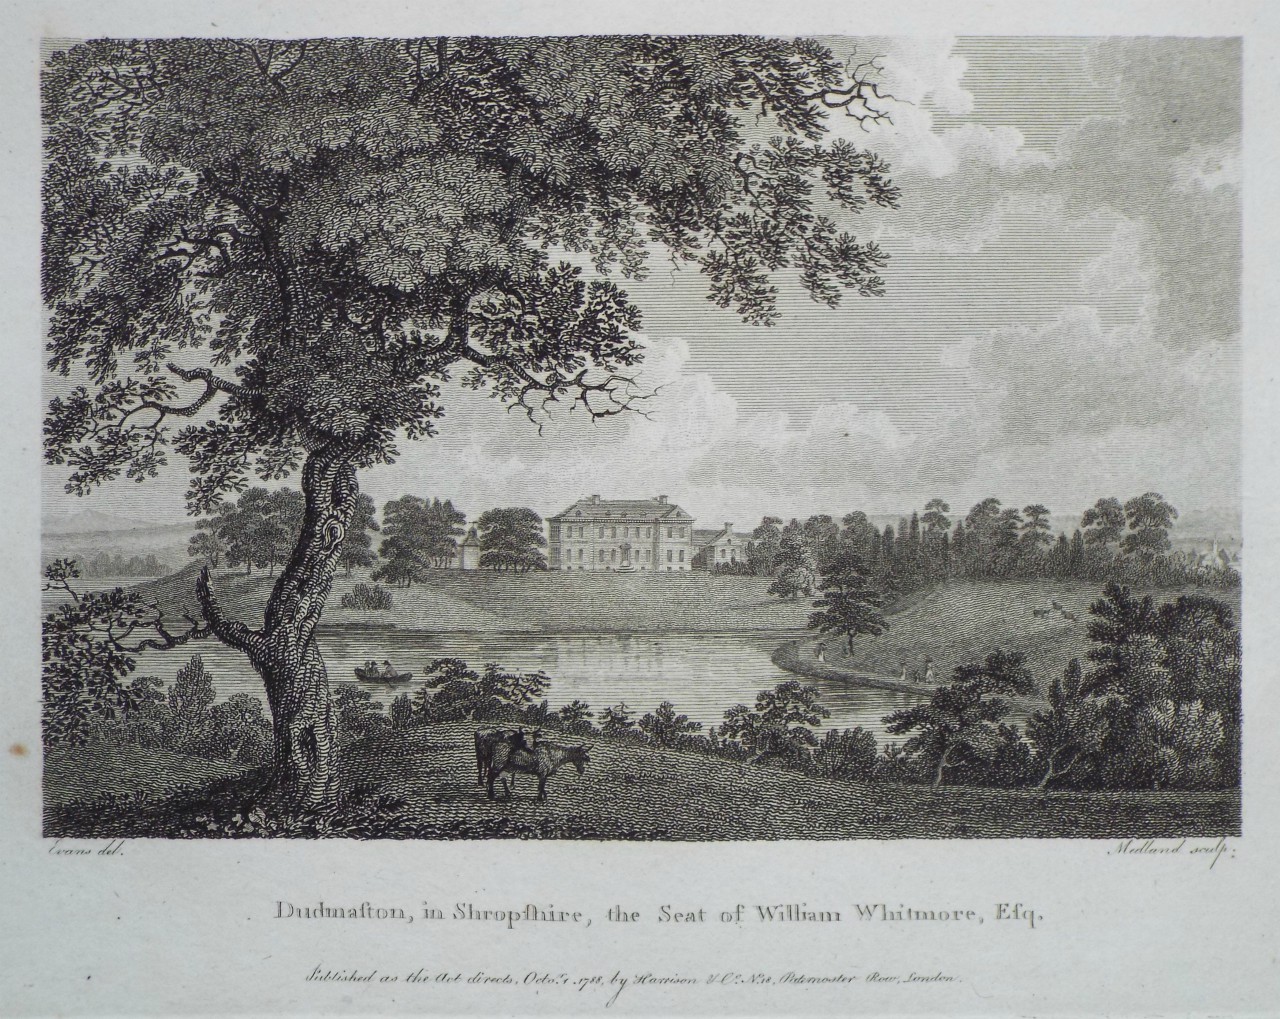 Print - Dudmaston, in Shropshire, the Seat of William Whitmore, Esqr. - 